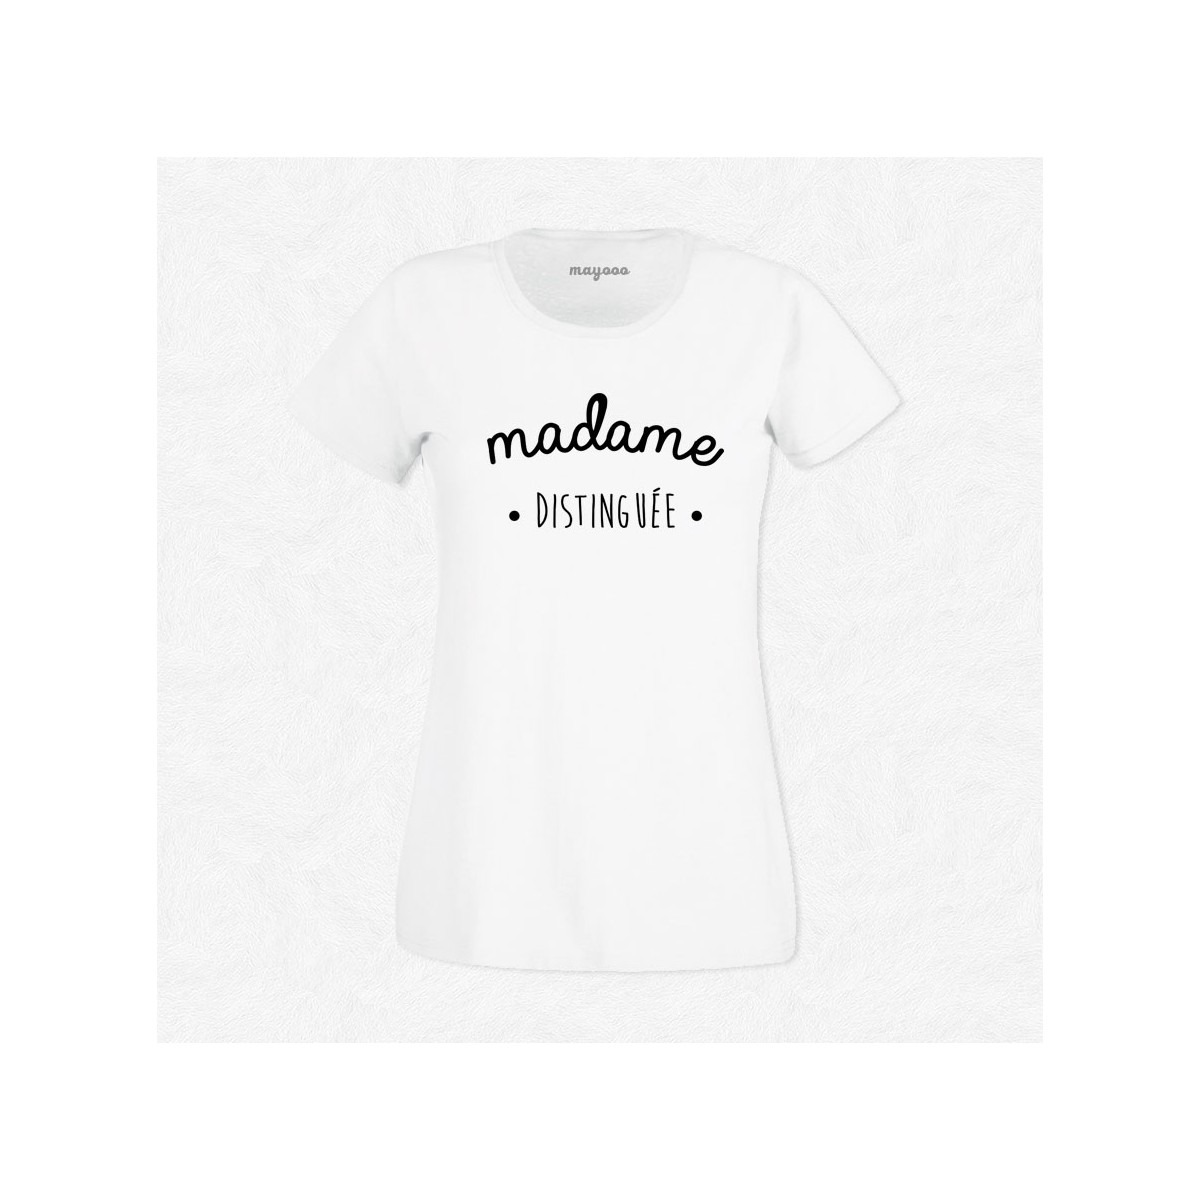 T-shirt Madame distinguée